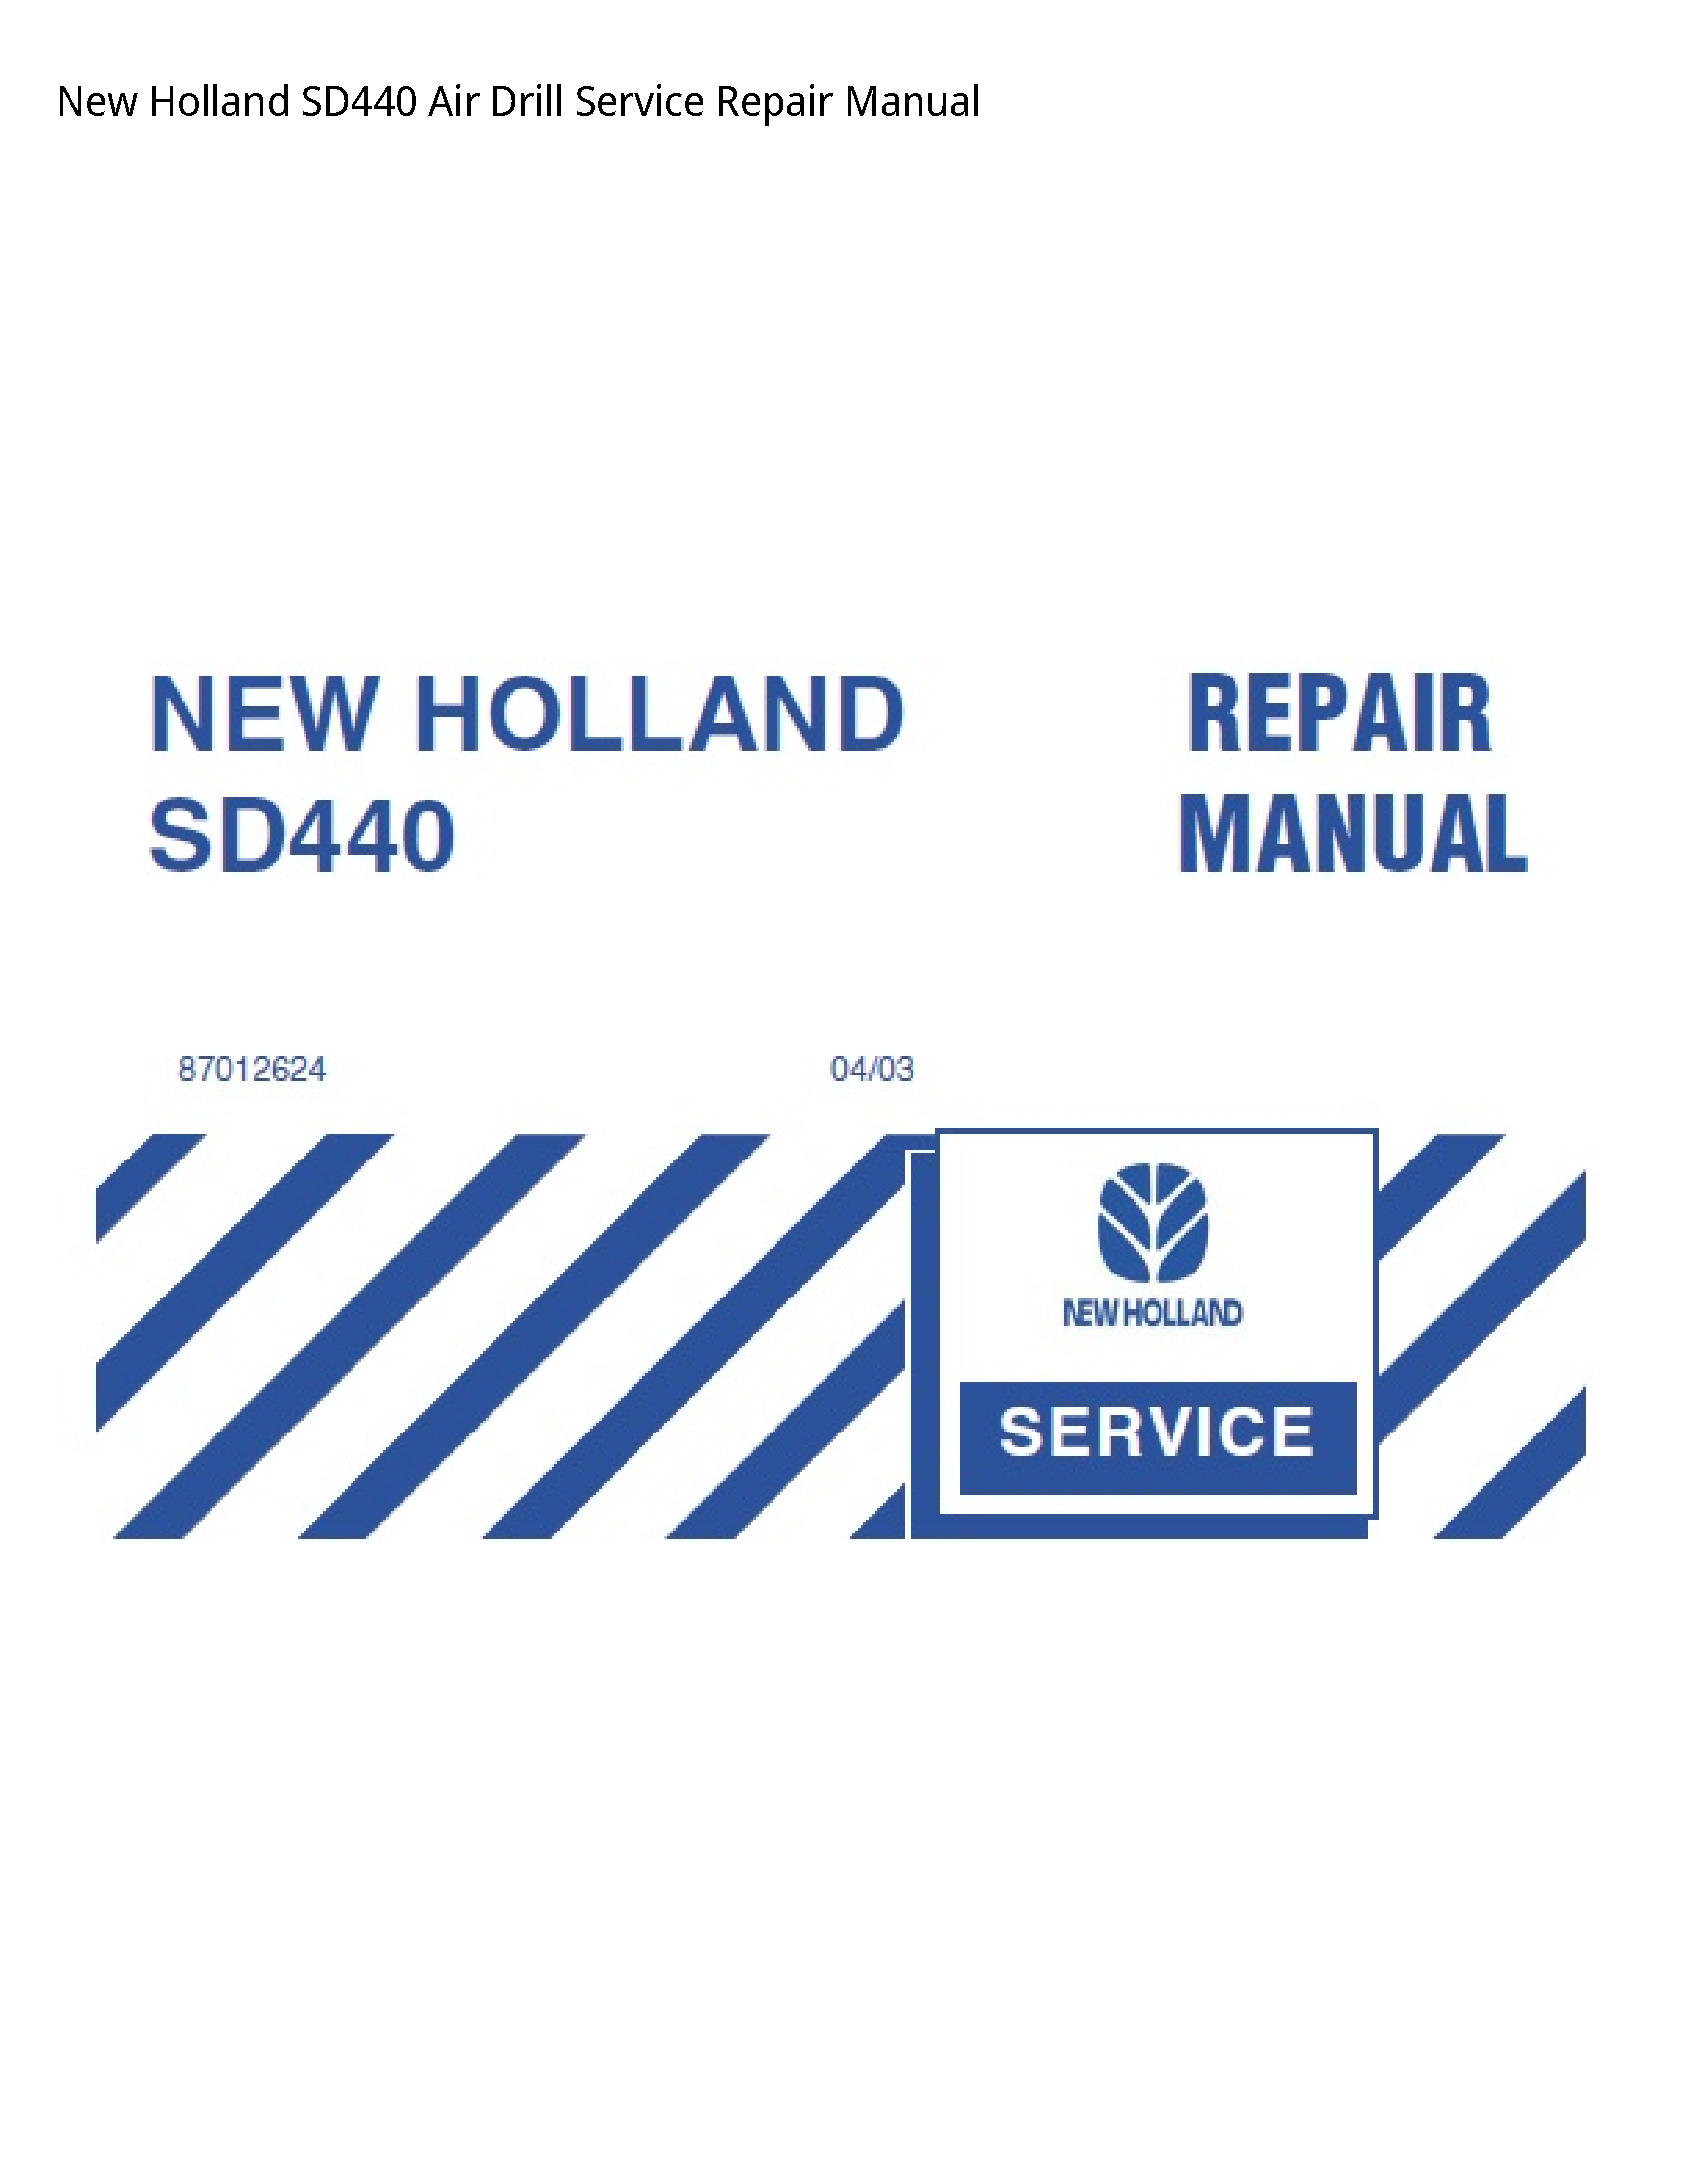 New Holland SD440 Air Drill manual